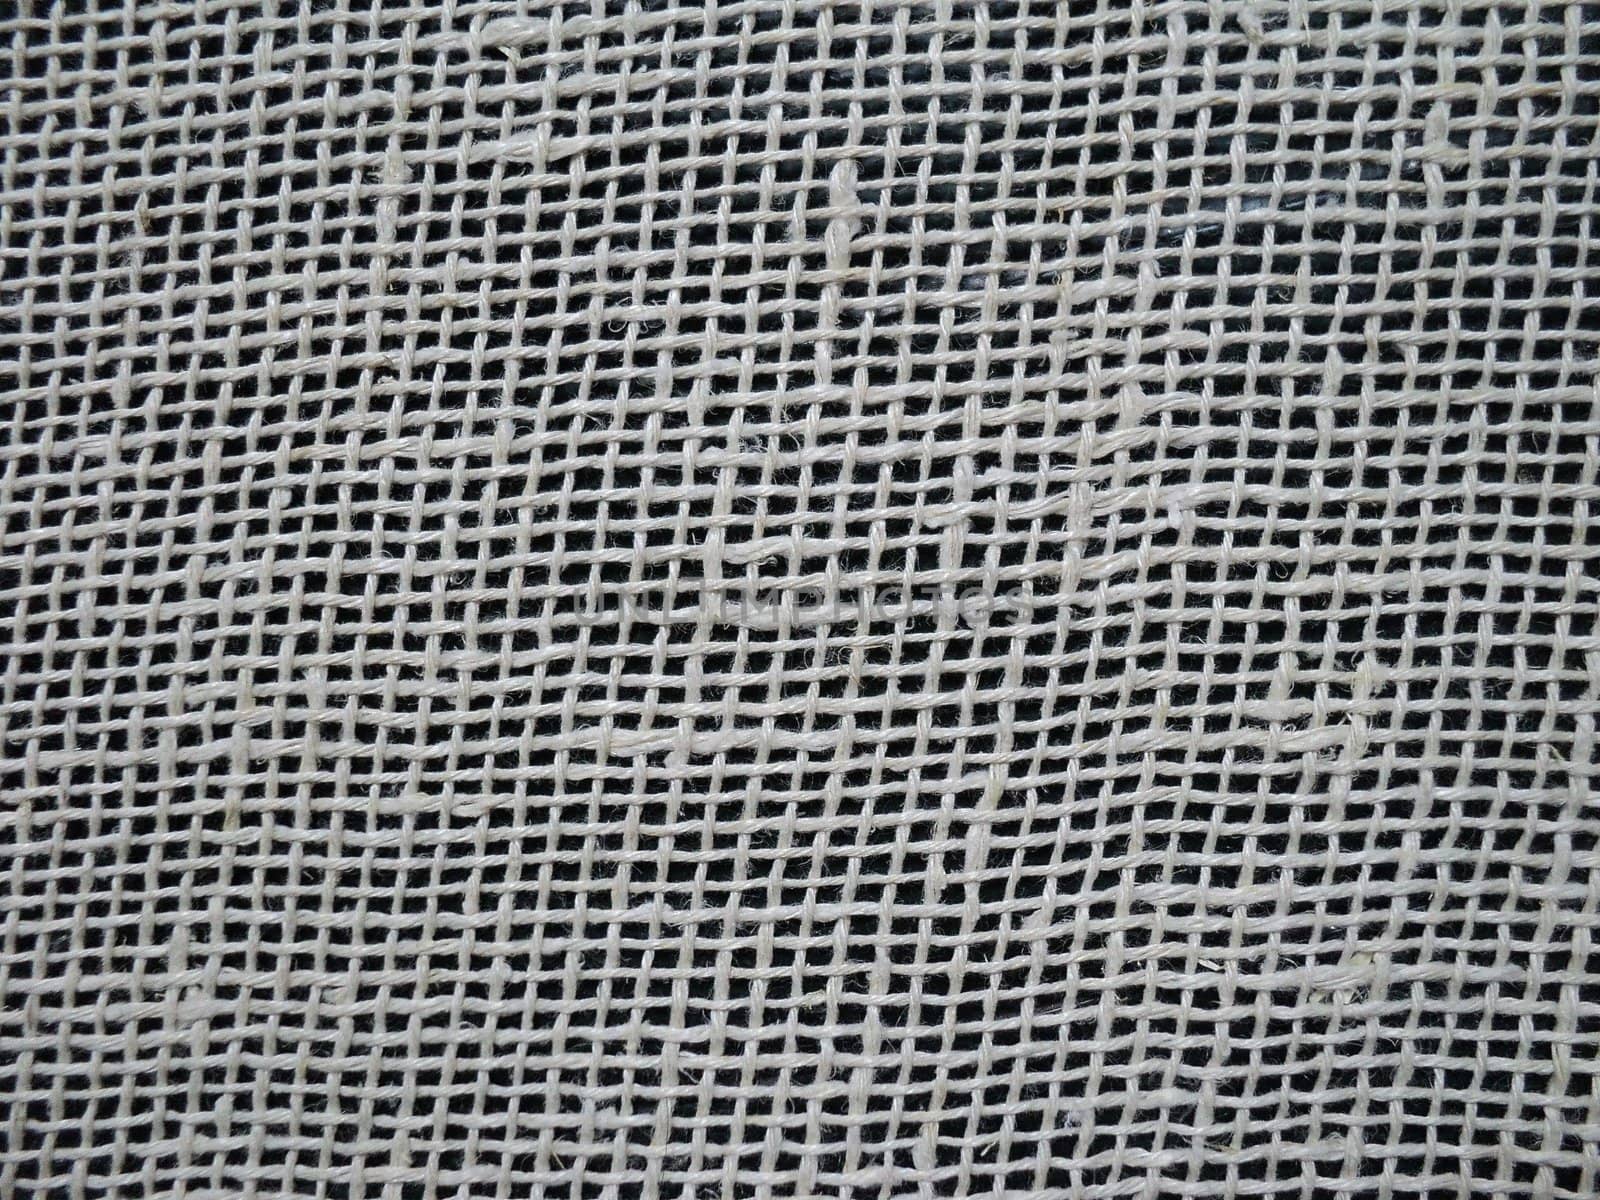 The texture of fabric by Krakatuk